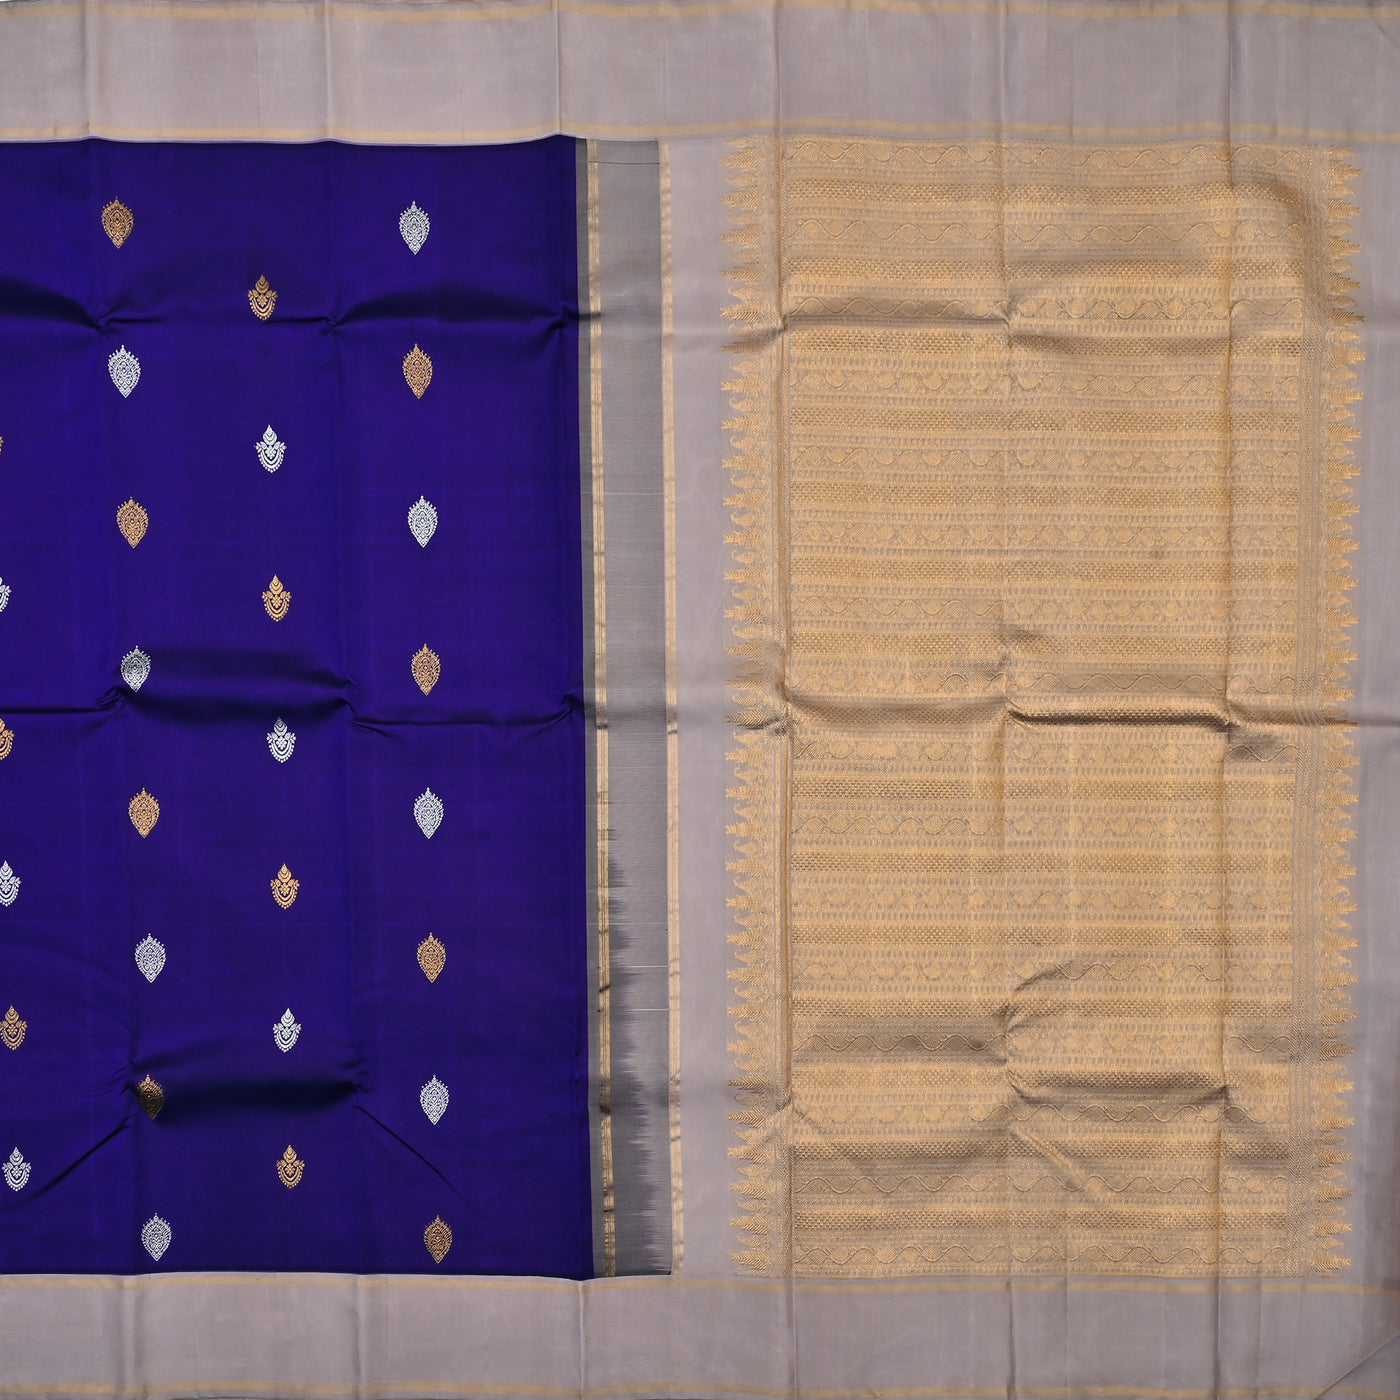 MS Blue Kanchipuram Silk Saree with Gold and Silver Zari Butta Design